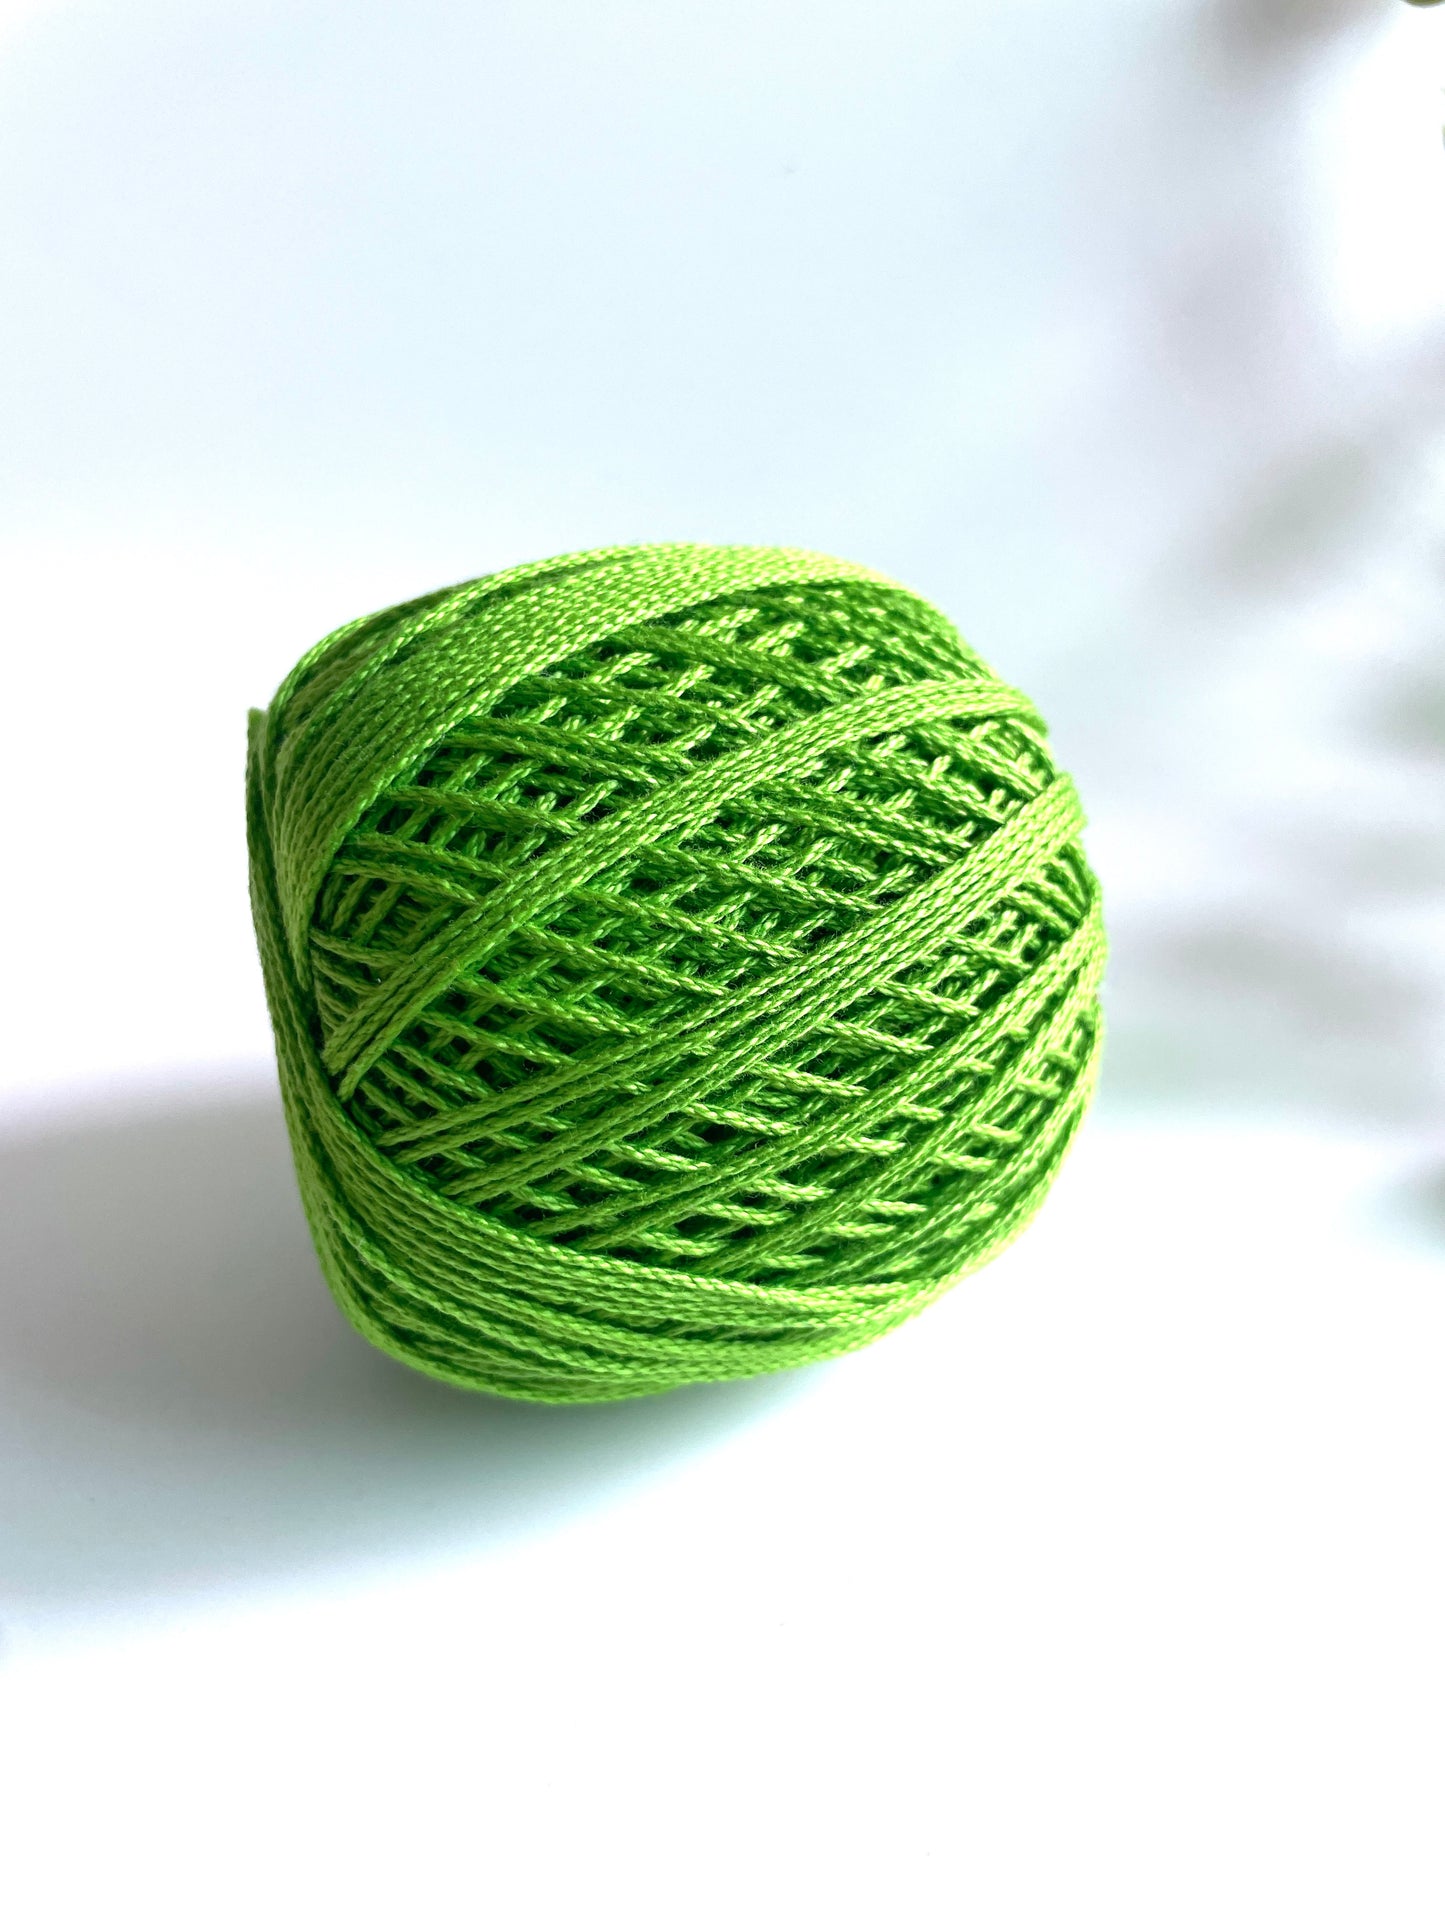 Knitting/Crochet  Threads - Parrot Green